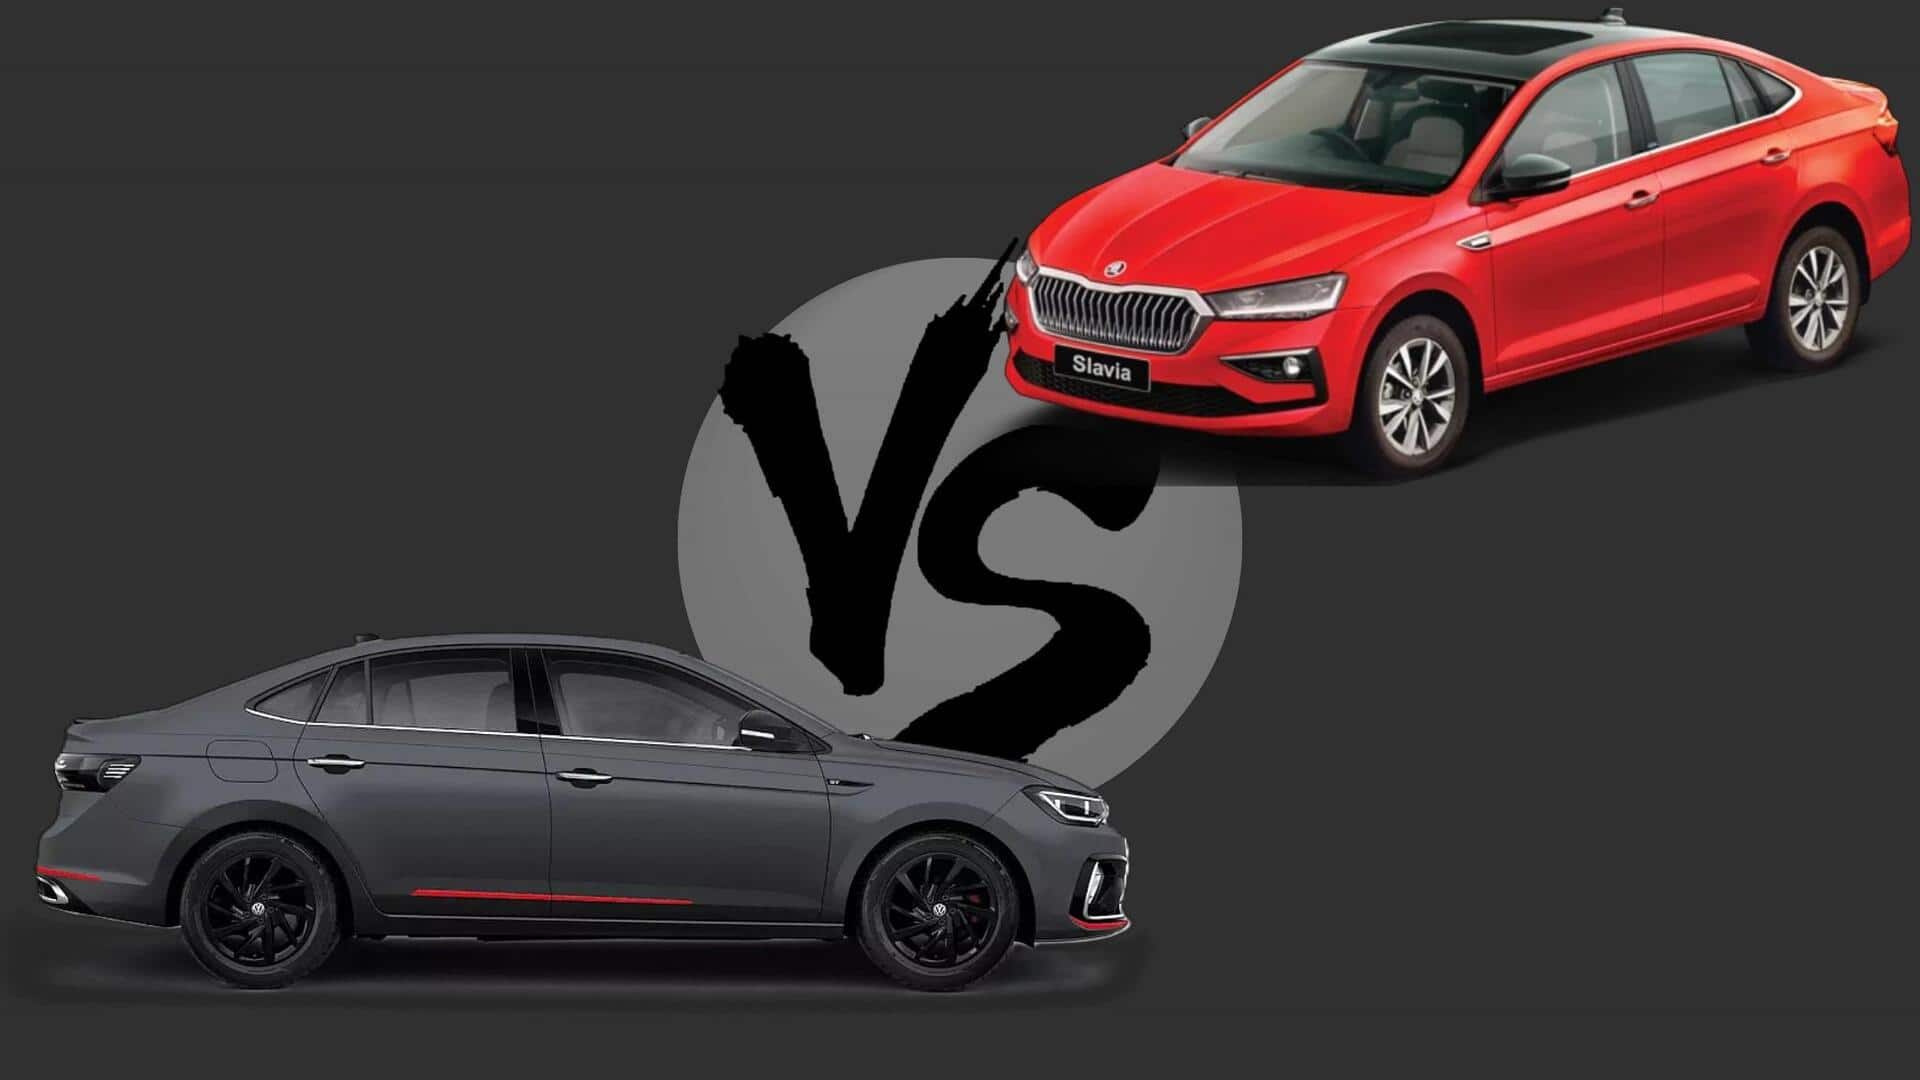 SKODA SLAVIA Style or Volkswagen Virtus Matte: Which is better